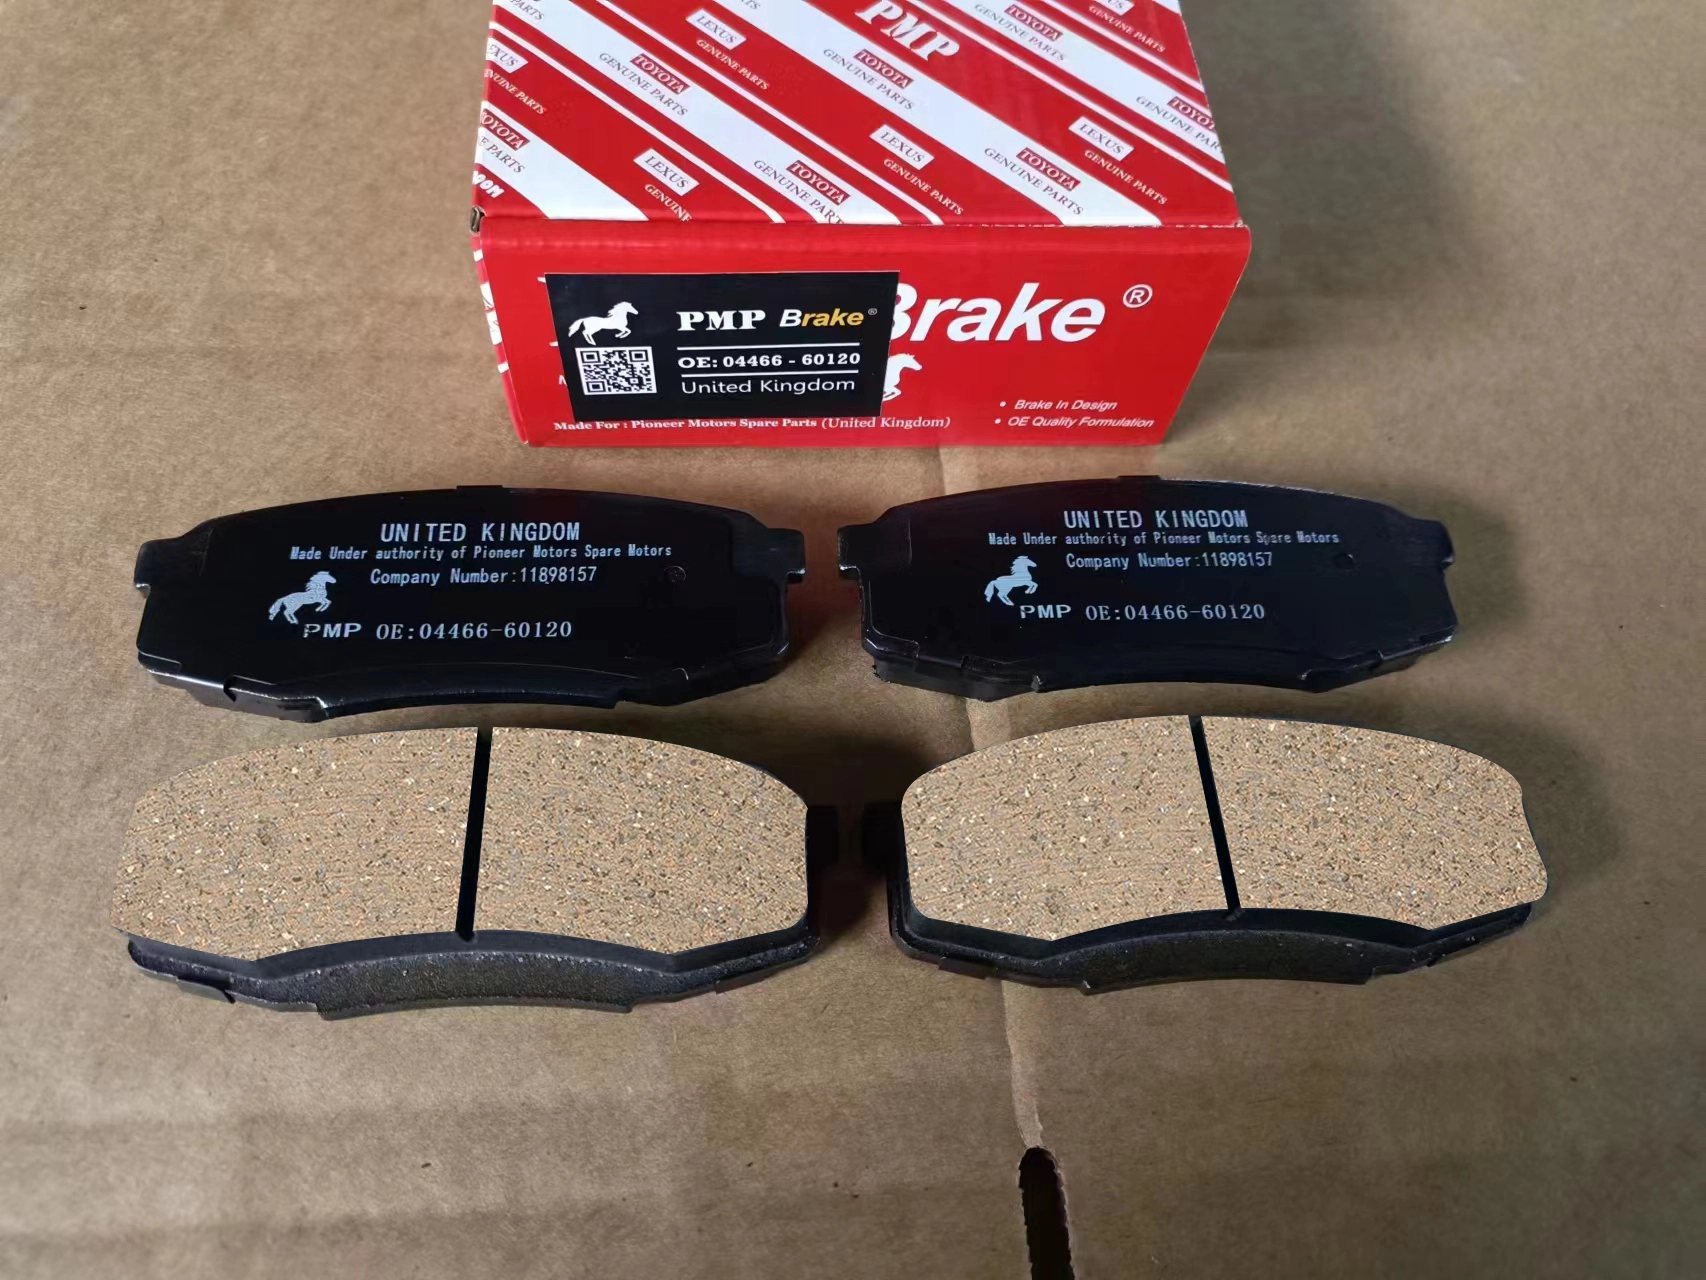 Ceramic brake pads: durable, heat-resistant pads for efficient braking.